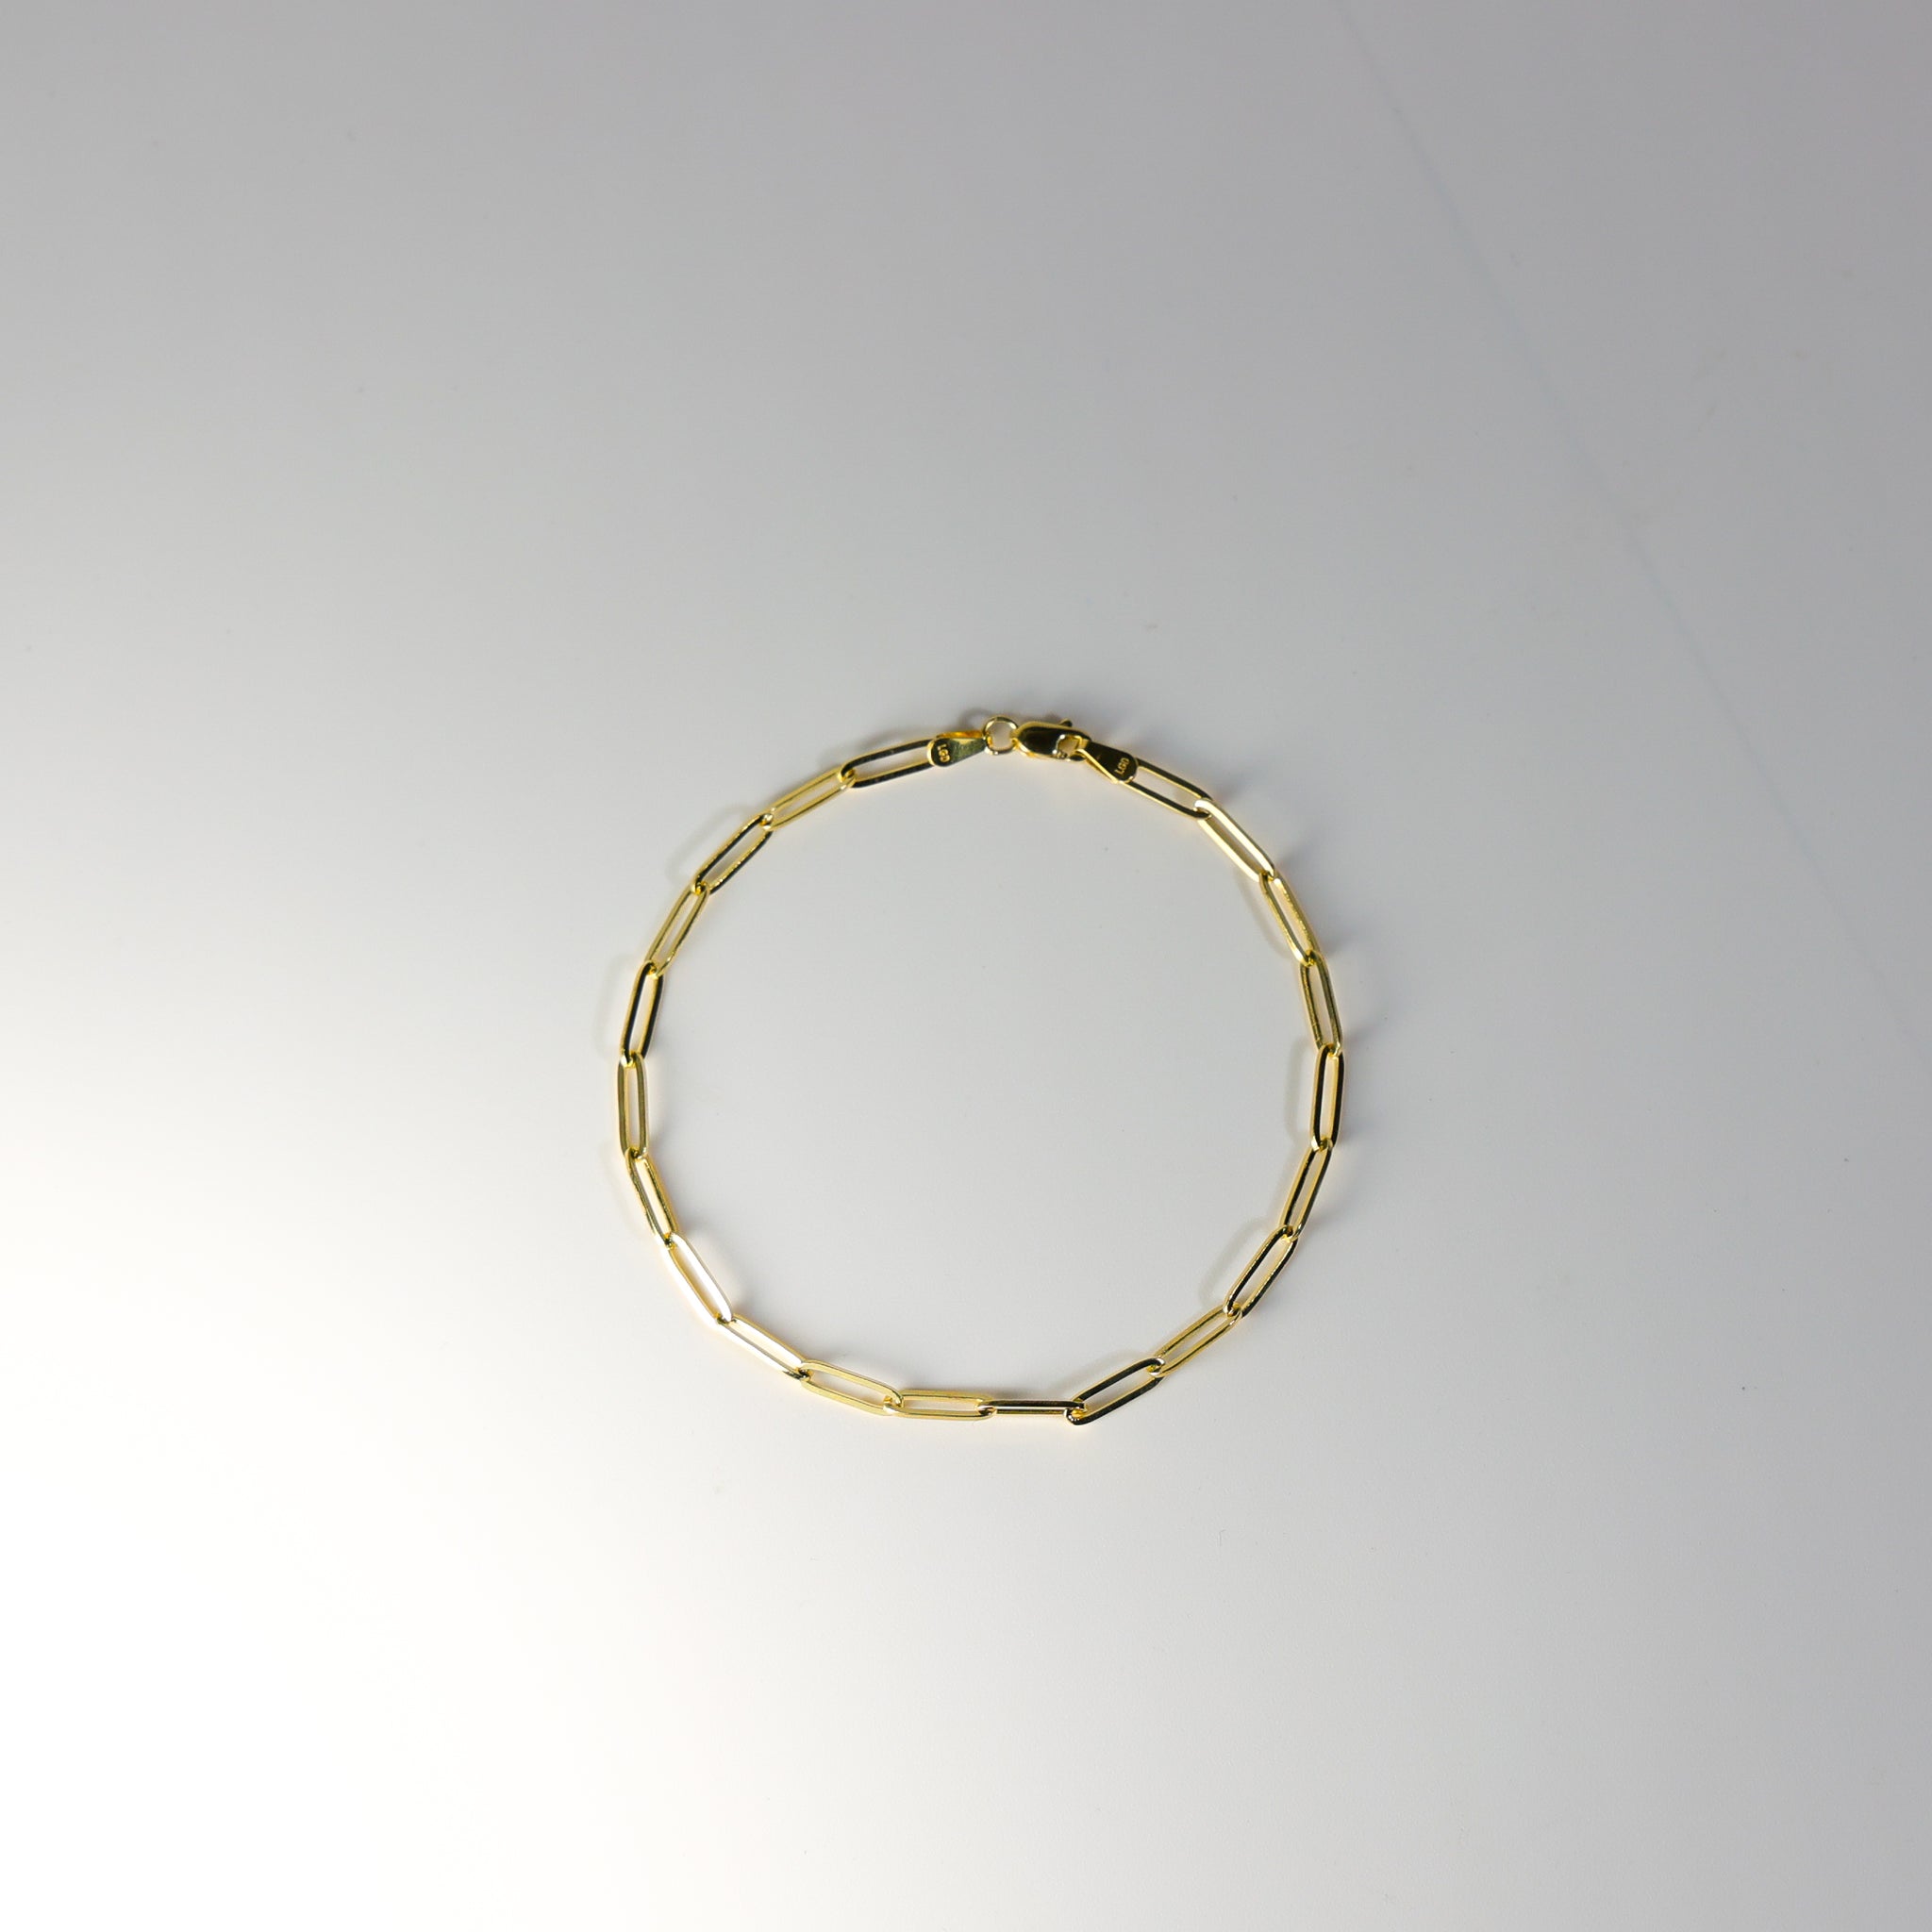 14K 3MM Gold Paperclip link Bracelet Model-CH0579 - Charlie & Co. Jewelry